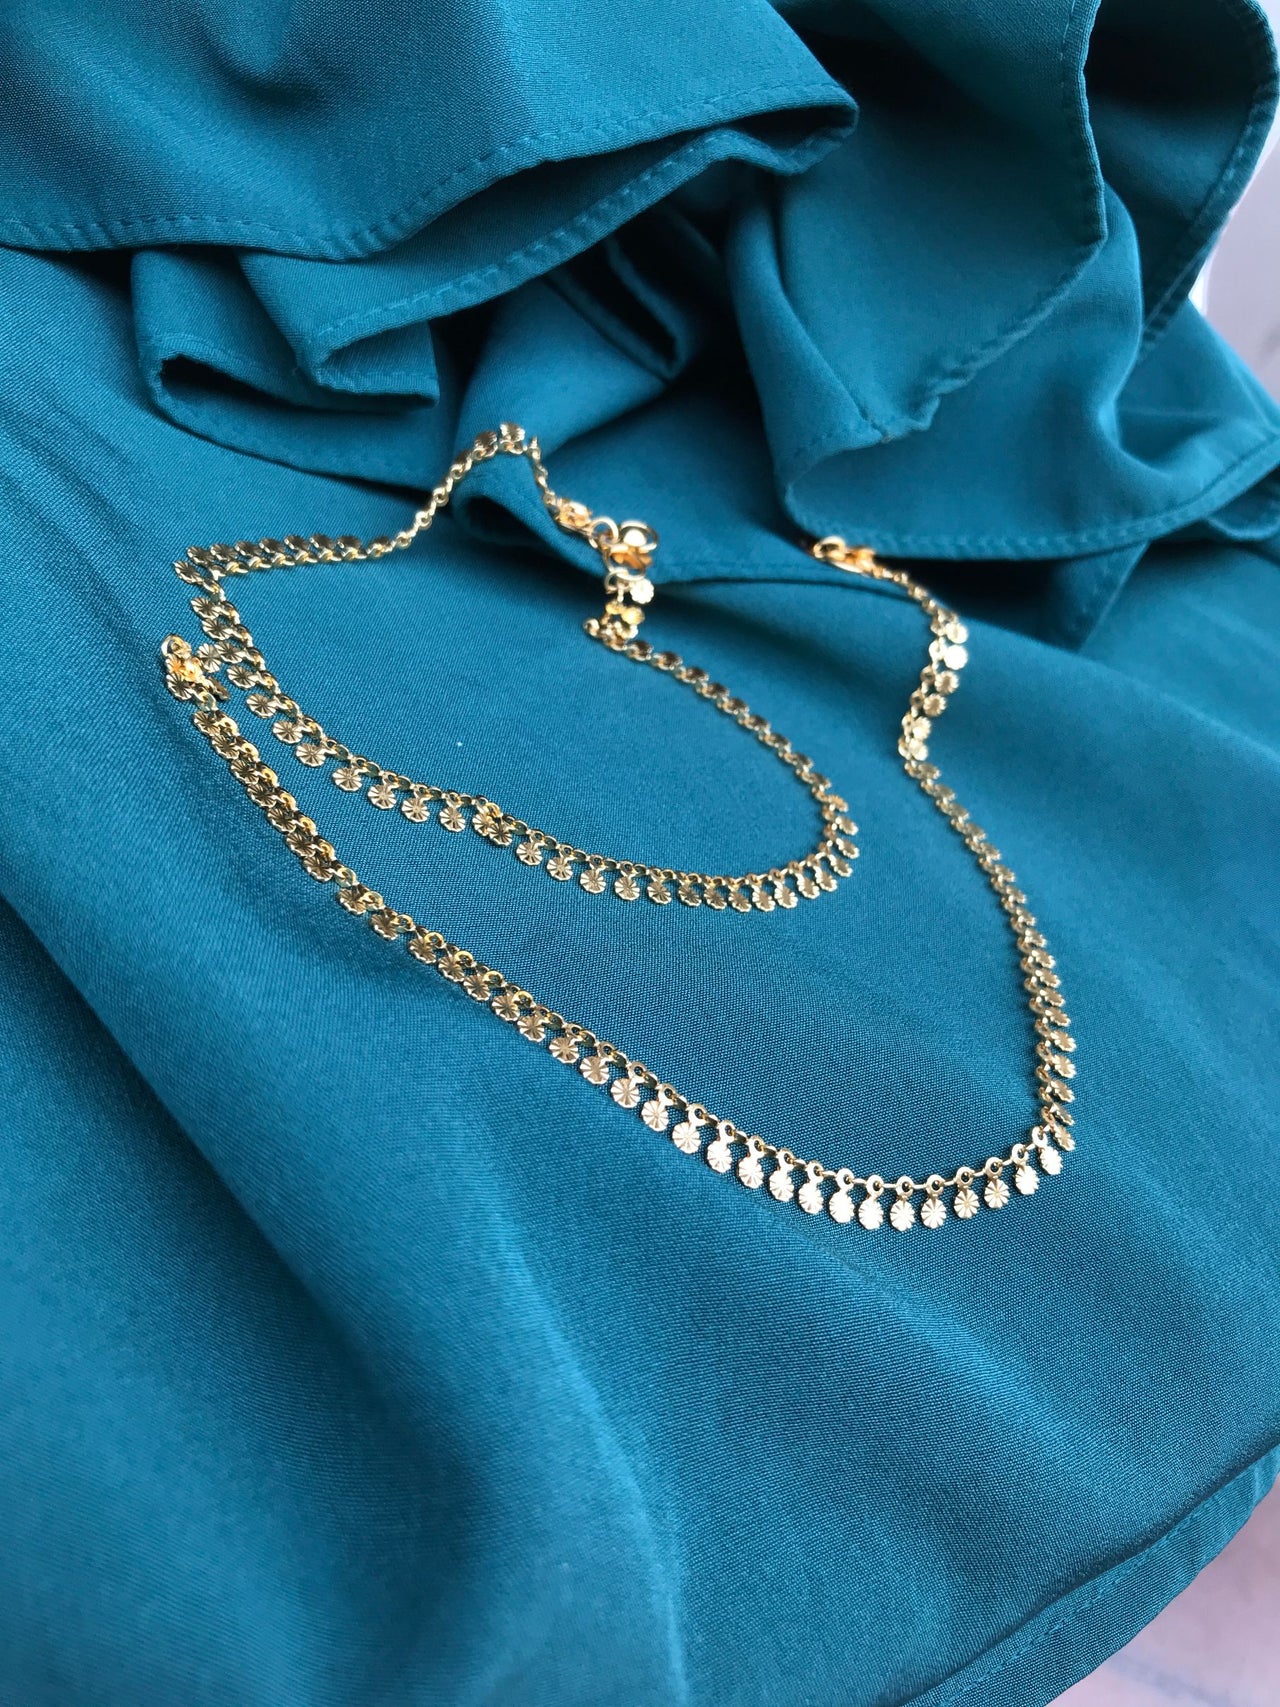 Round Pattern Gold Anklet - Abdesignsjewellery